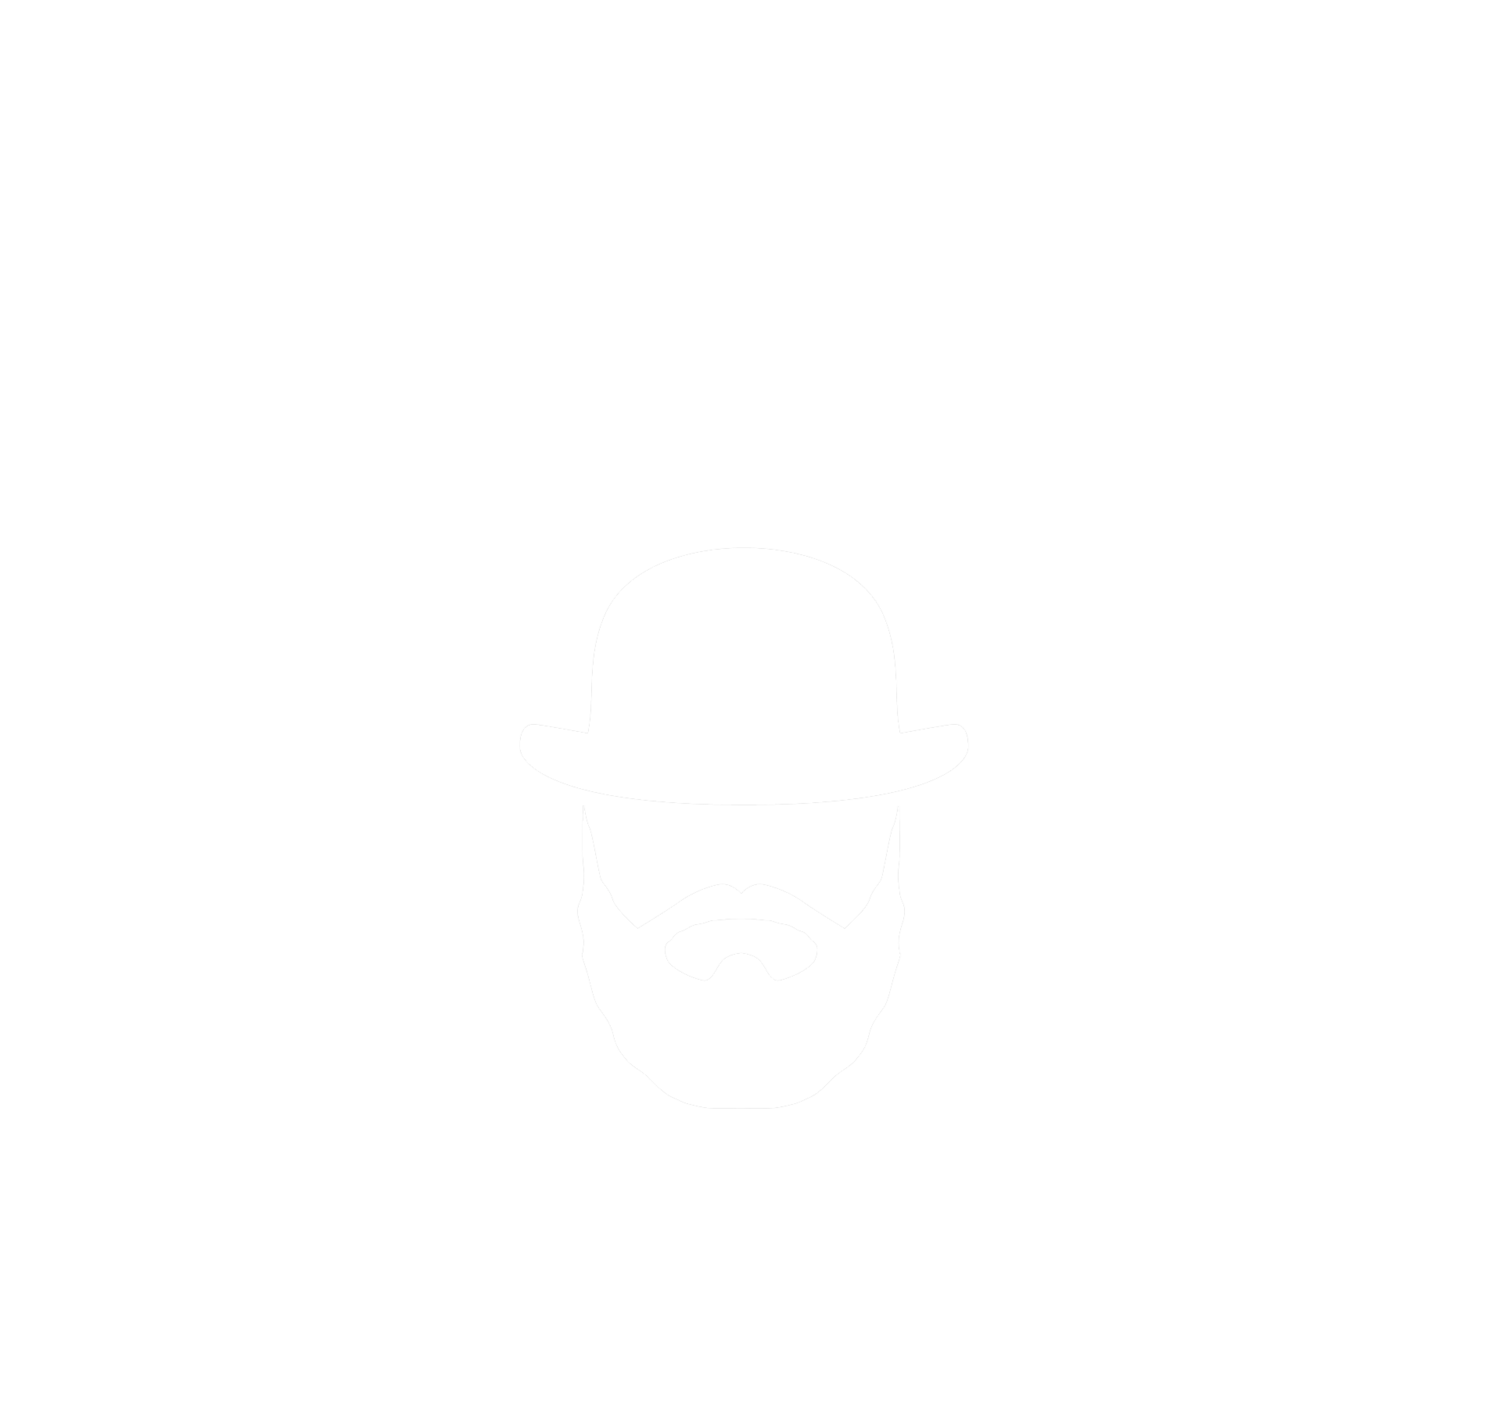 the gentleman bard